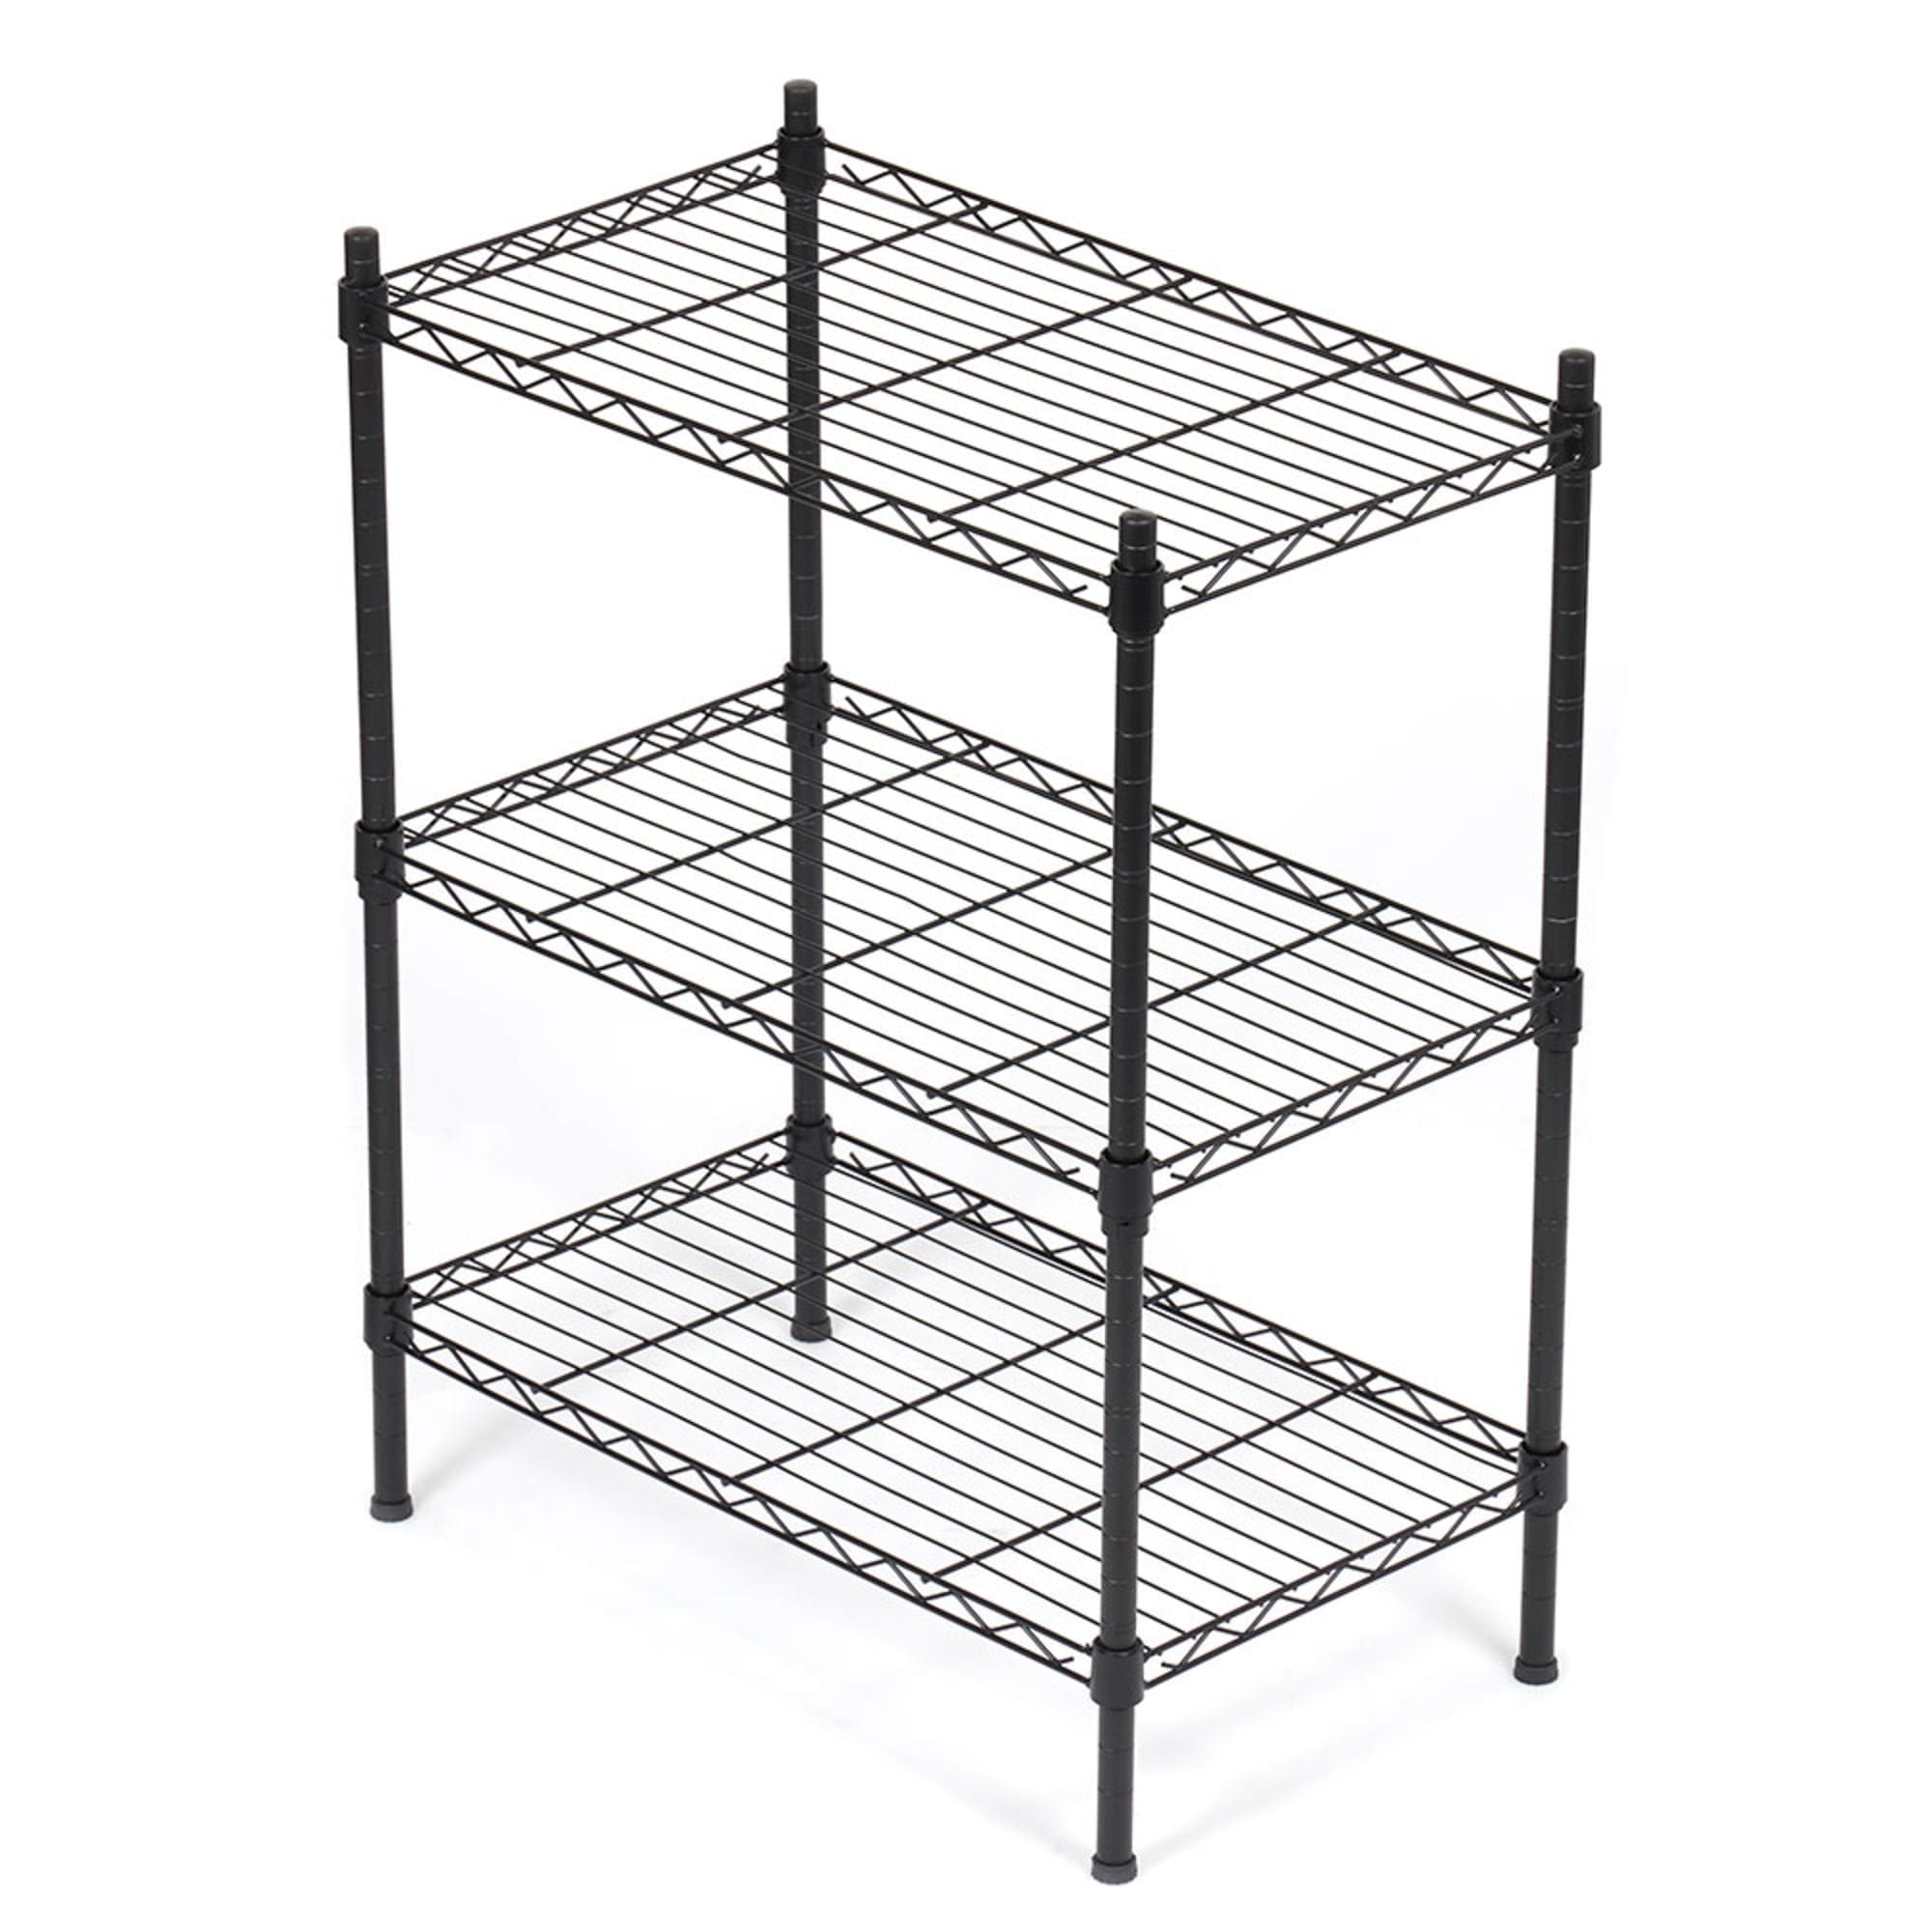 Home Basics 3 Tier Steel Wire Shelf, Black $30.00 EACH, CASE PACK OF 1